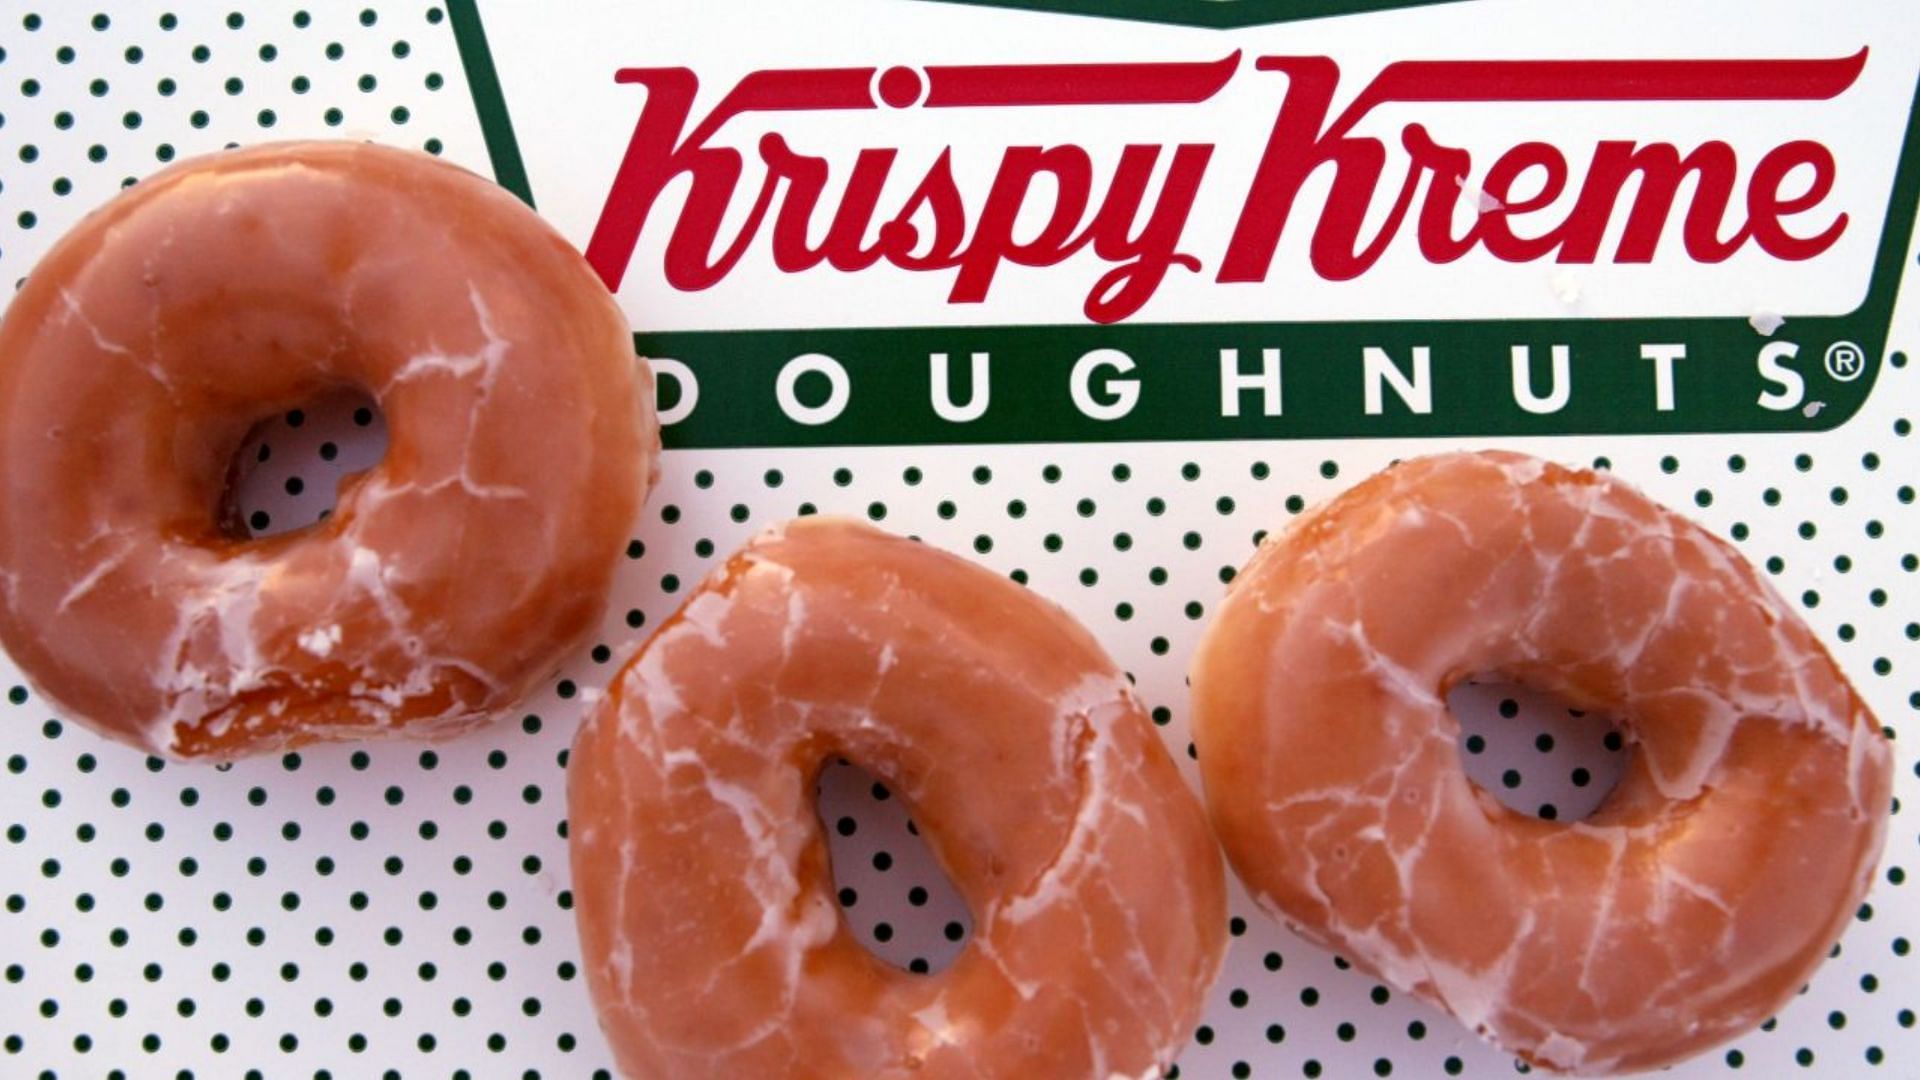 the Krispy Kreme logo with some glazed donuts (Image via Joe Raedle/GettyImages)